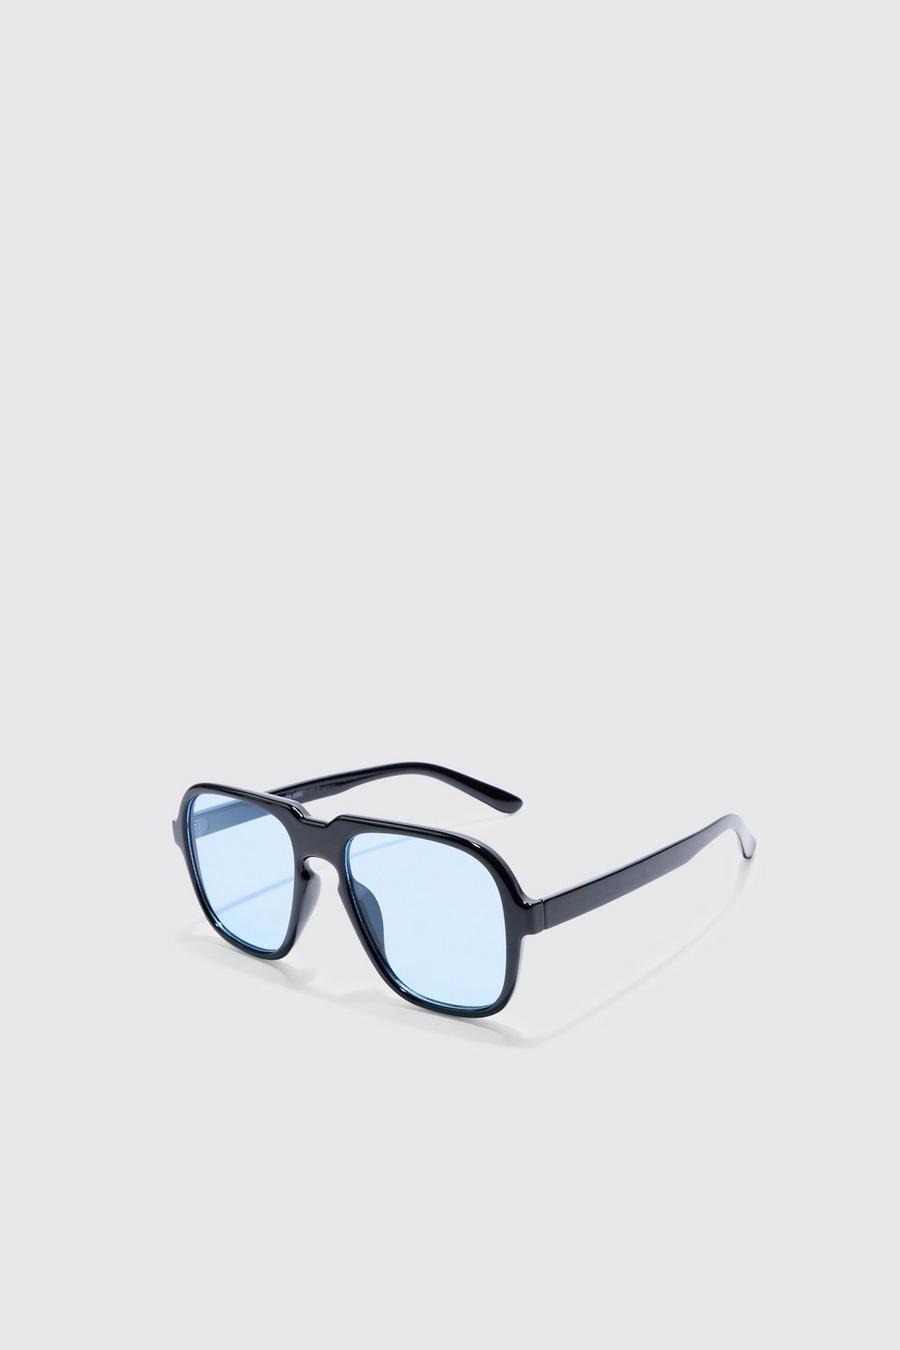 Black Retro High Brow Sunglasses With Blue Lens image number 1